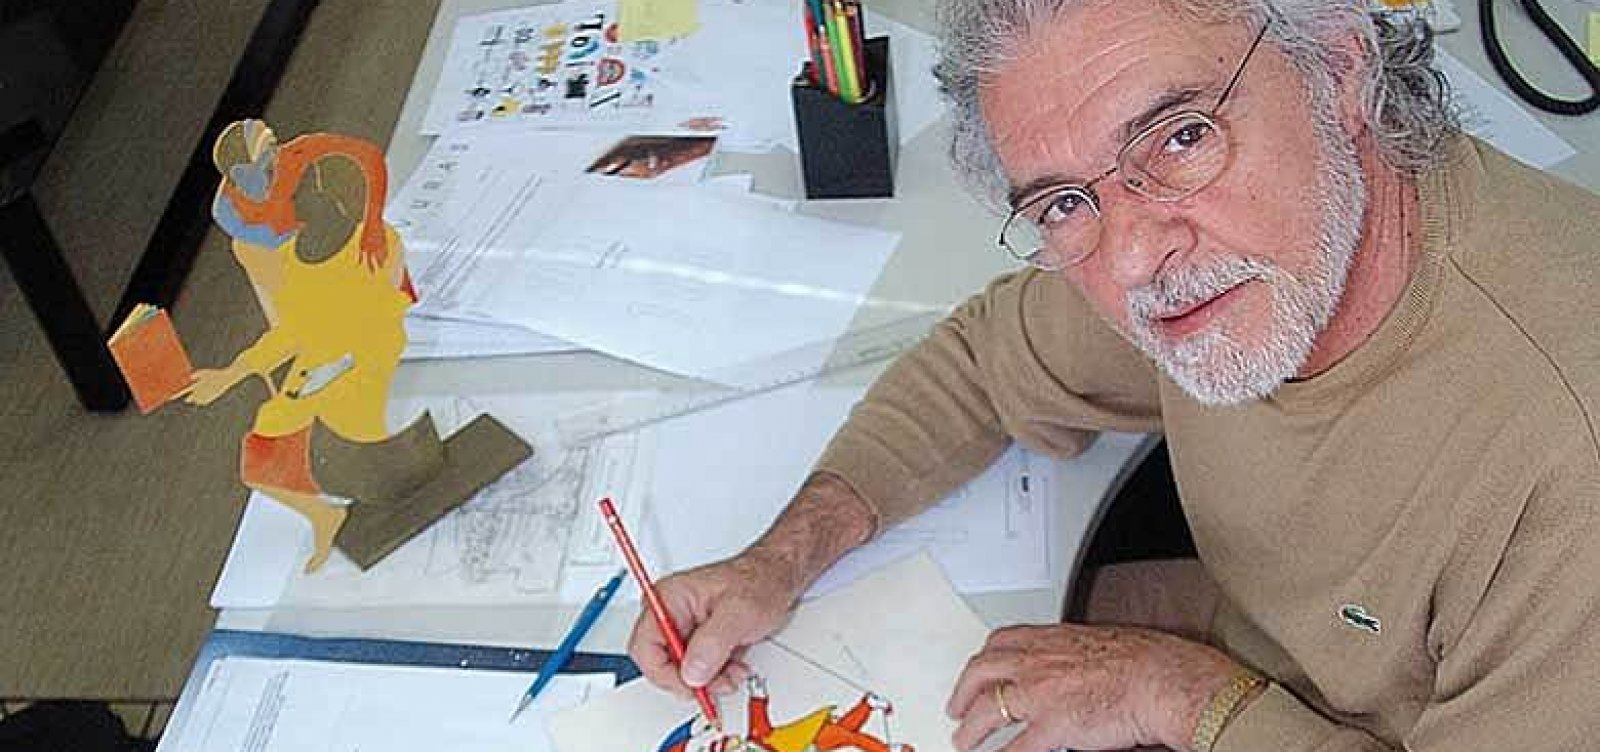 Autor de famosas capas de discos, morre designer Elifas Andreato aos 76 anos